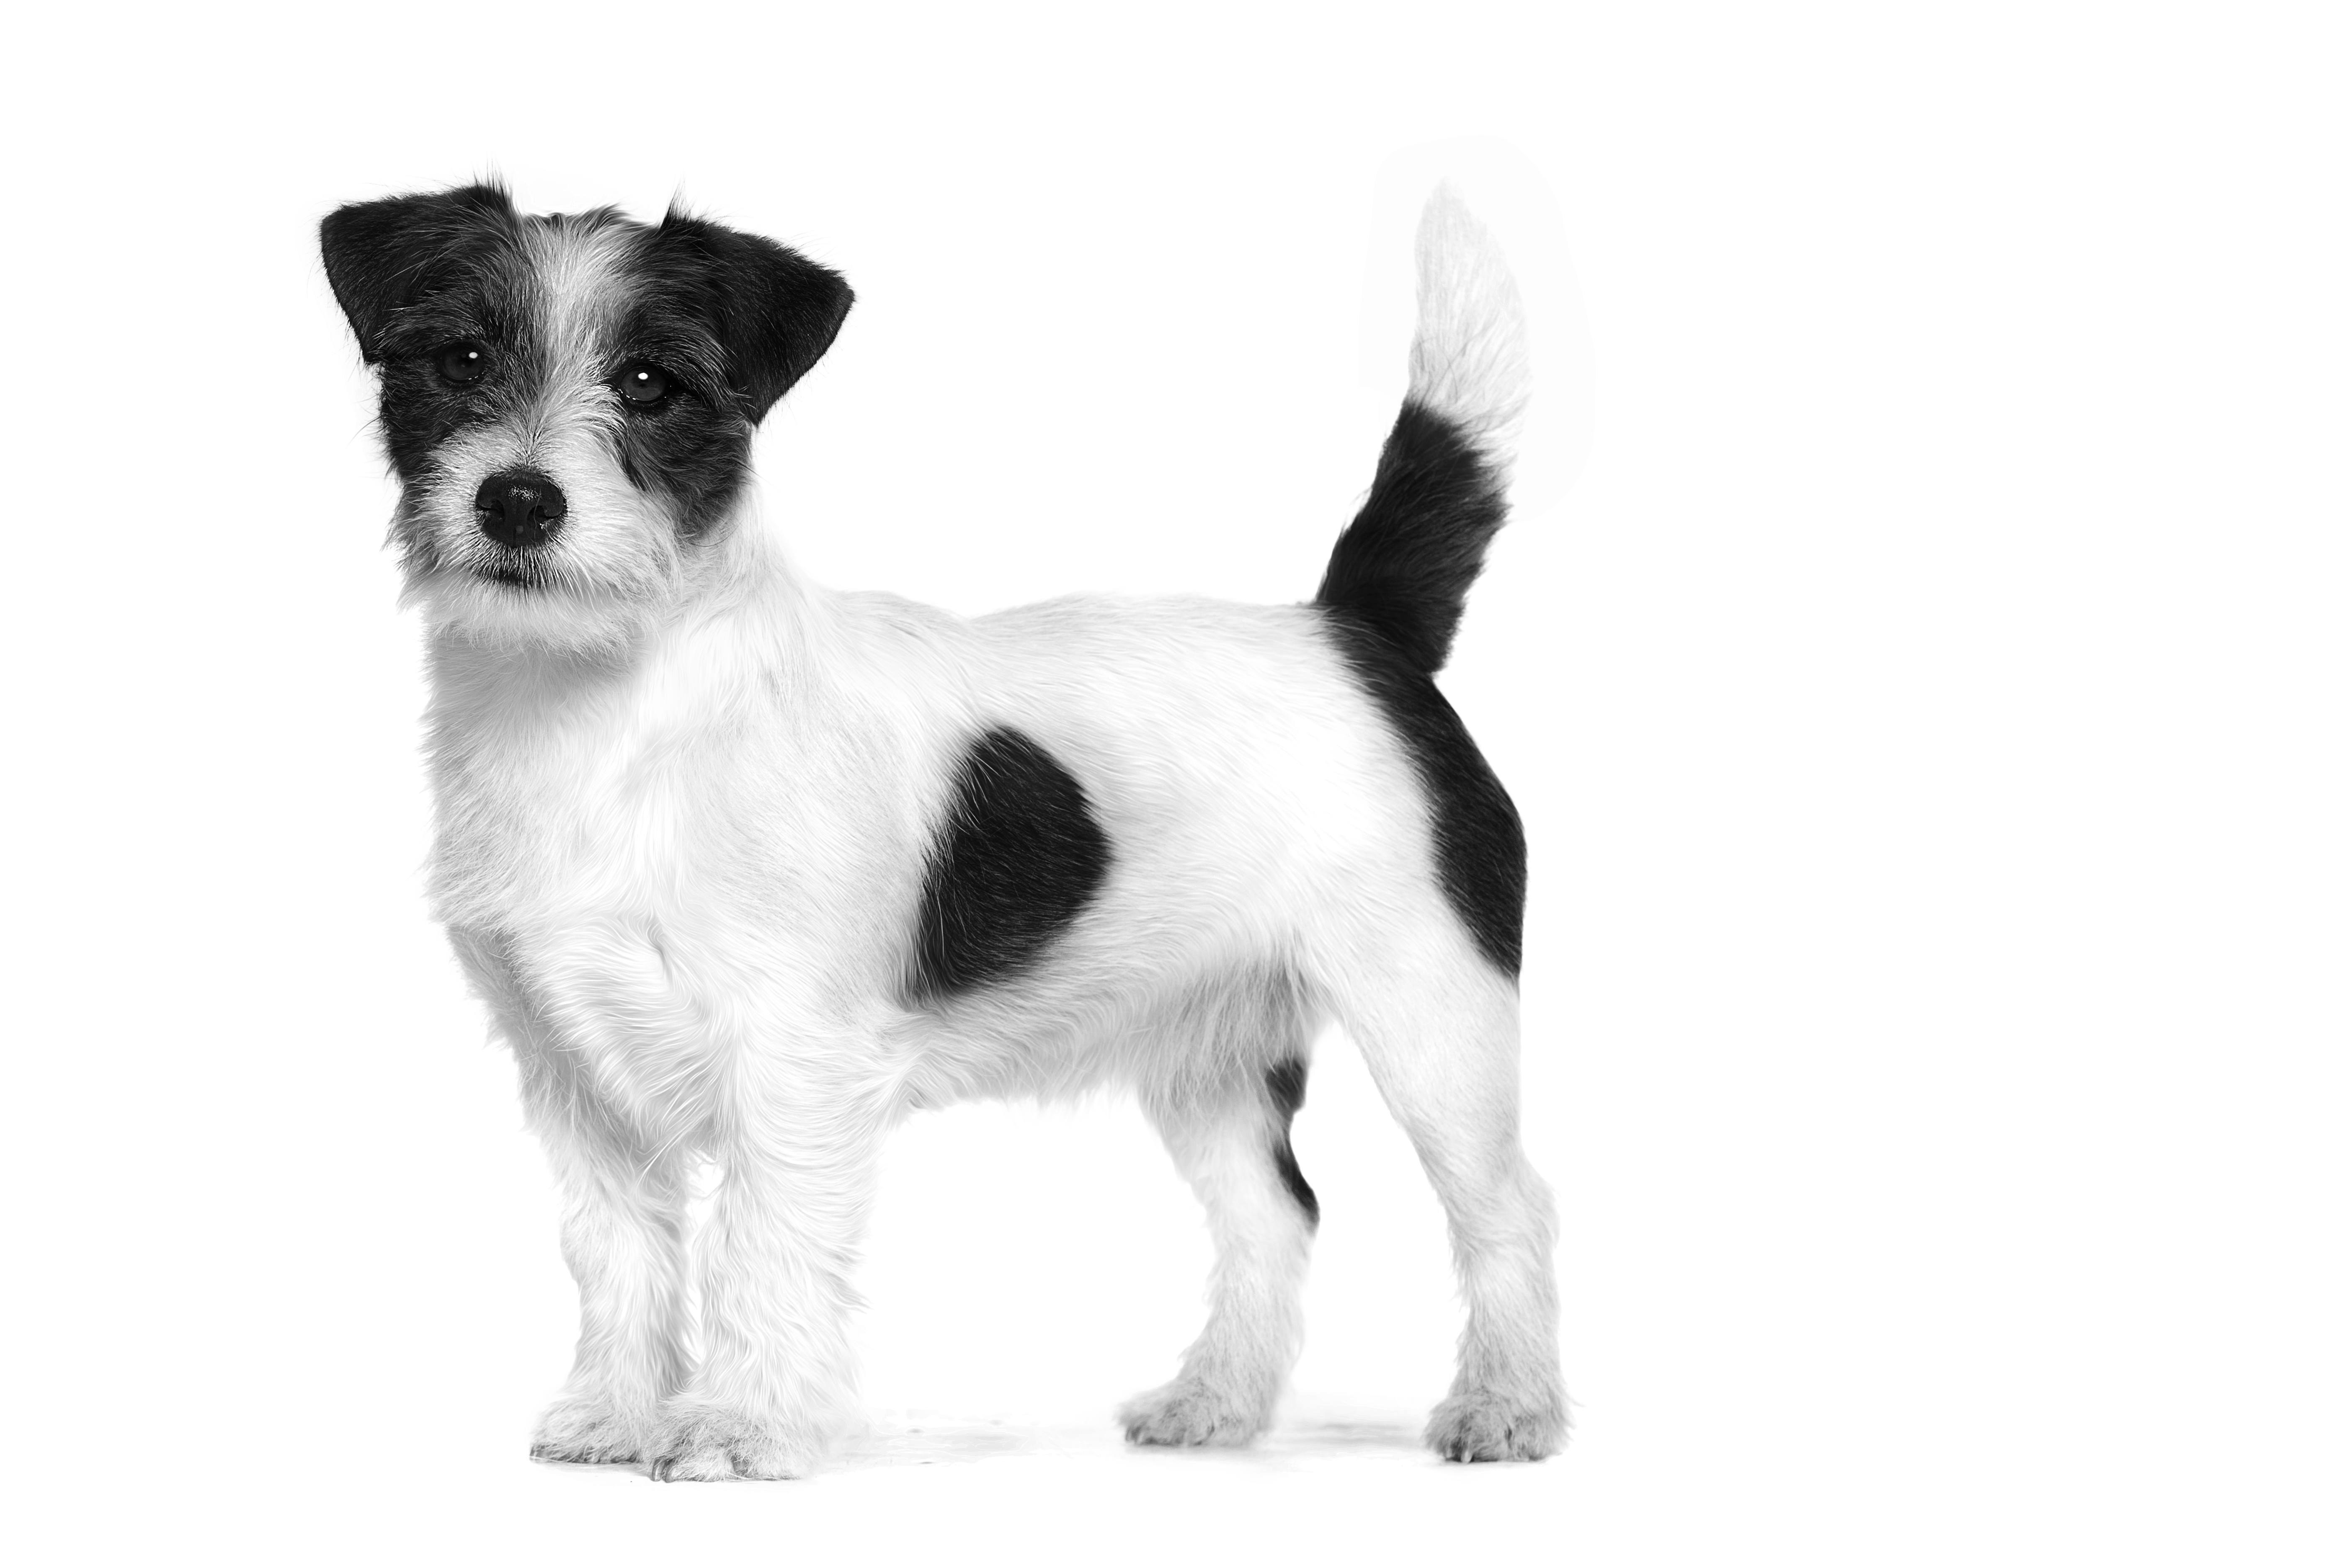 Jack Russell Terrier adulto de pé, a preto e branco sobre um fundo branco